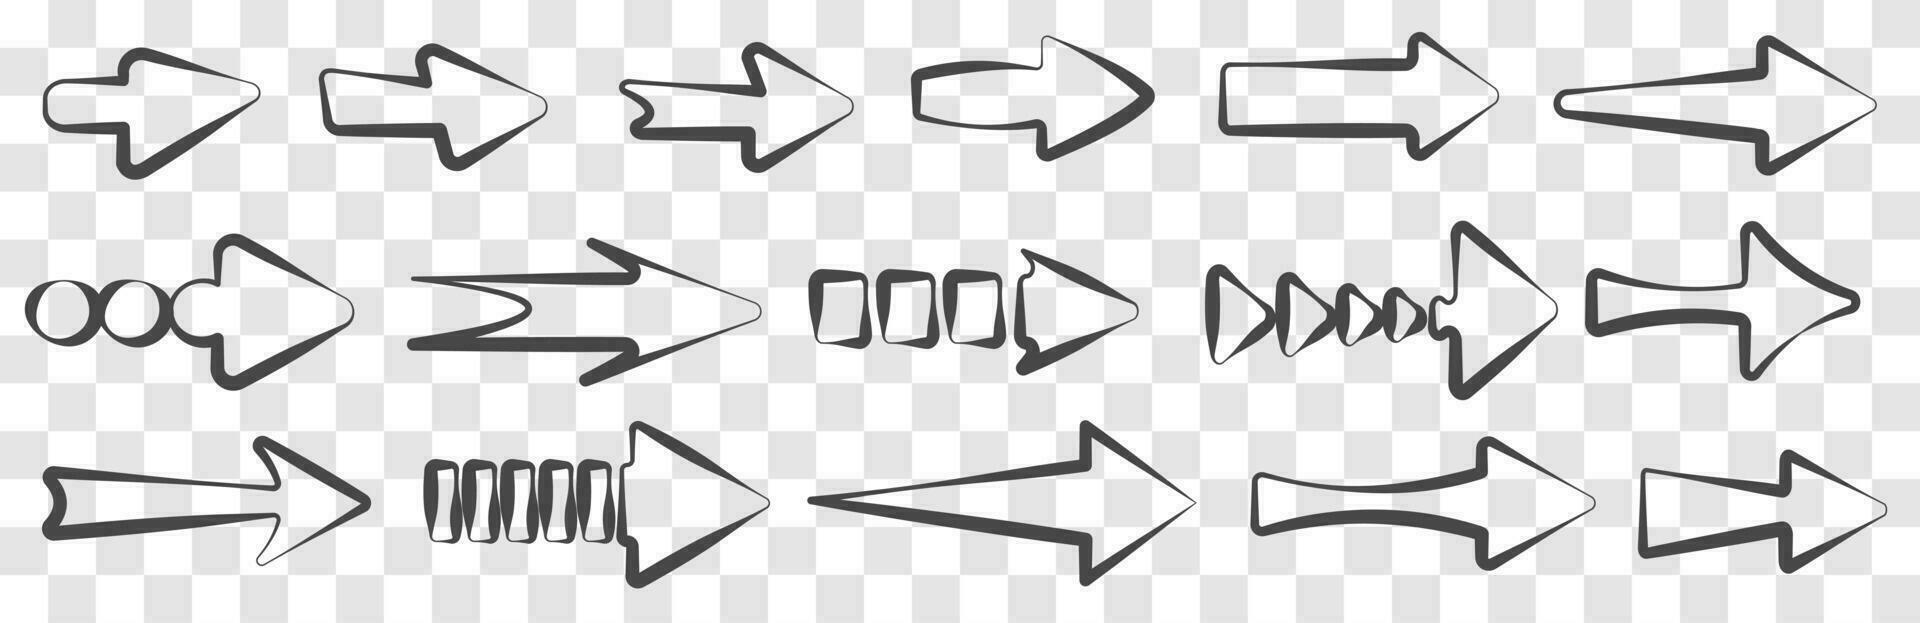 Arrows big black set icons. Arrow icon. Arrow vector collection. Arrow. Cursor. Modern simple arrows. Set of vector arrows of different shapes and sizes. Vector graphics. icons.